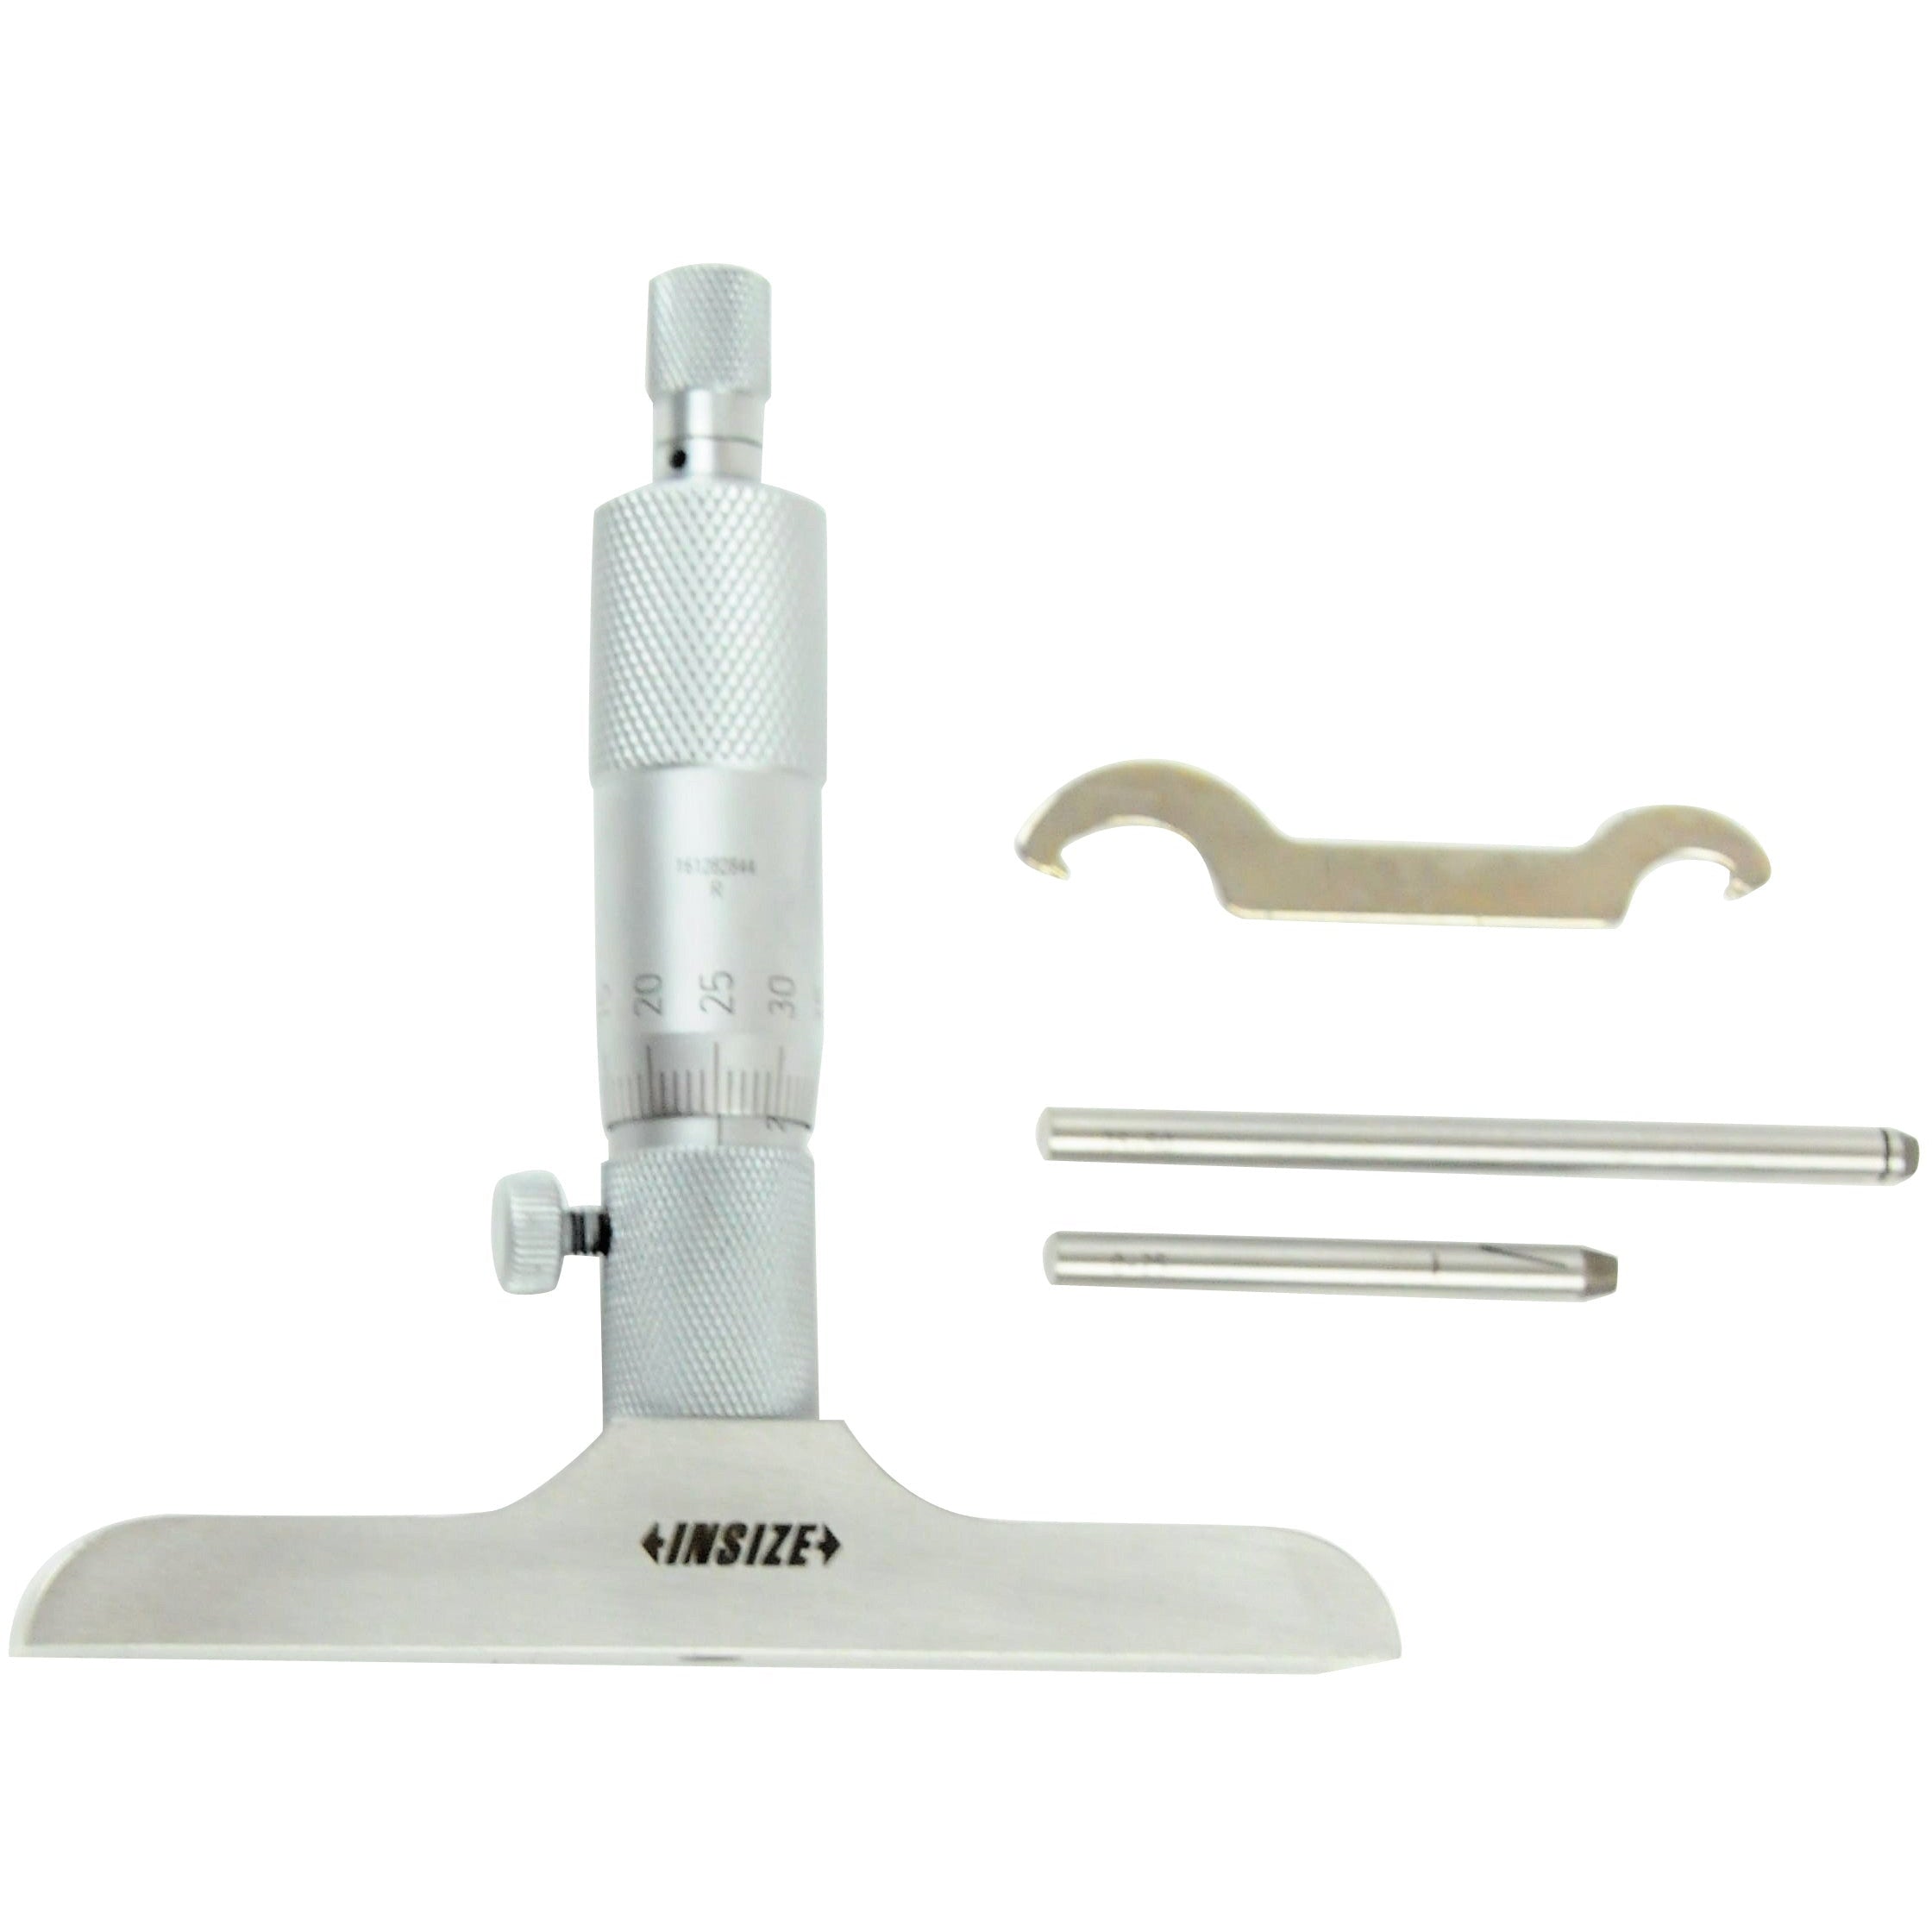 Insize Imperial Depth Micrometer 0-50mm Range Series 3240 - 50